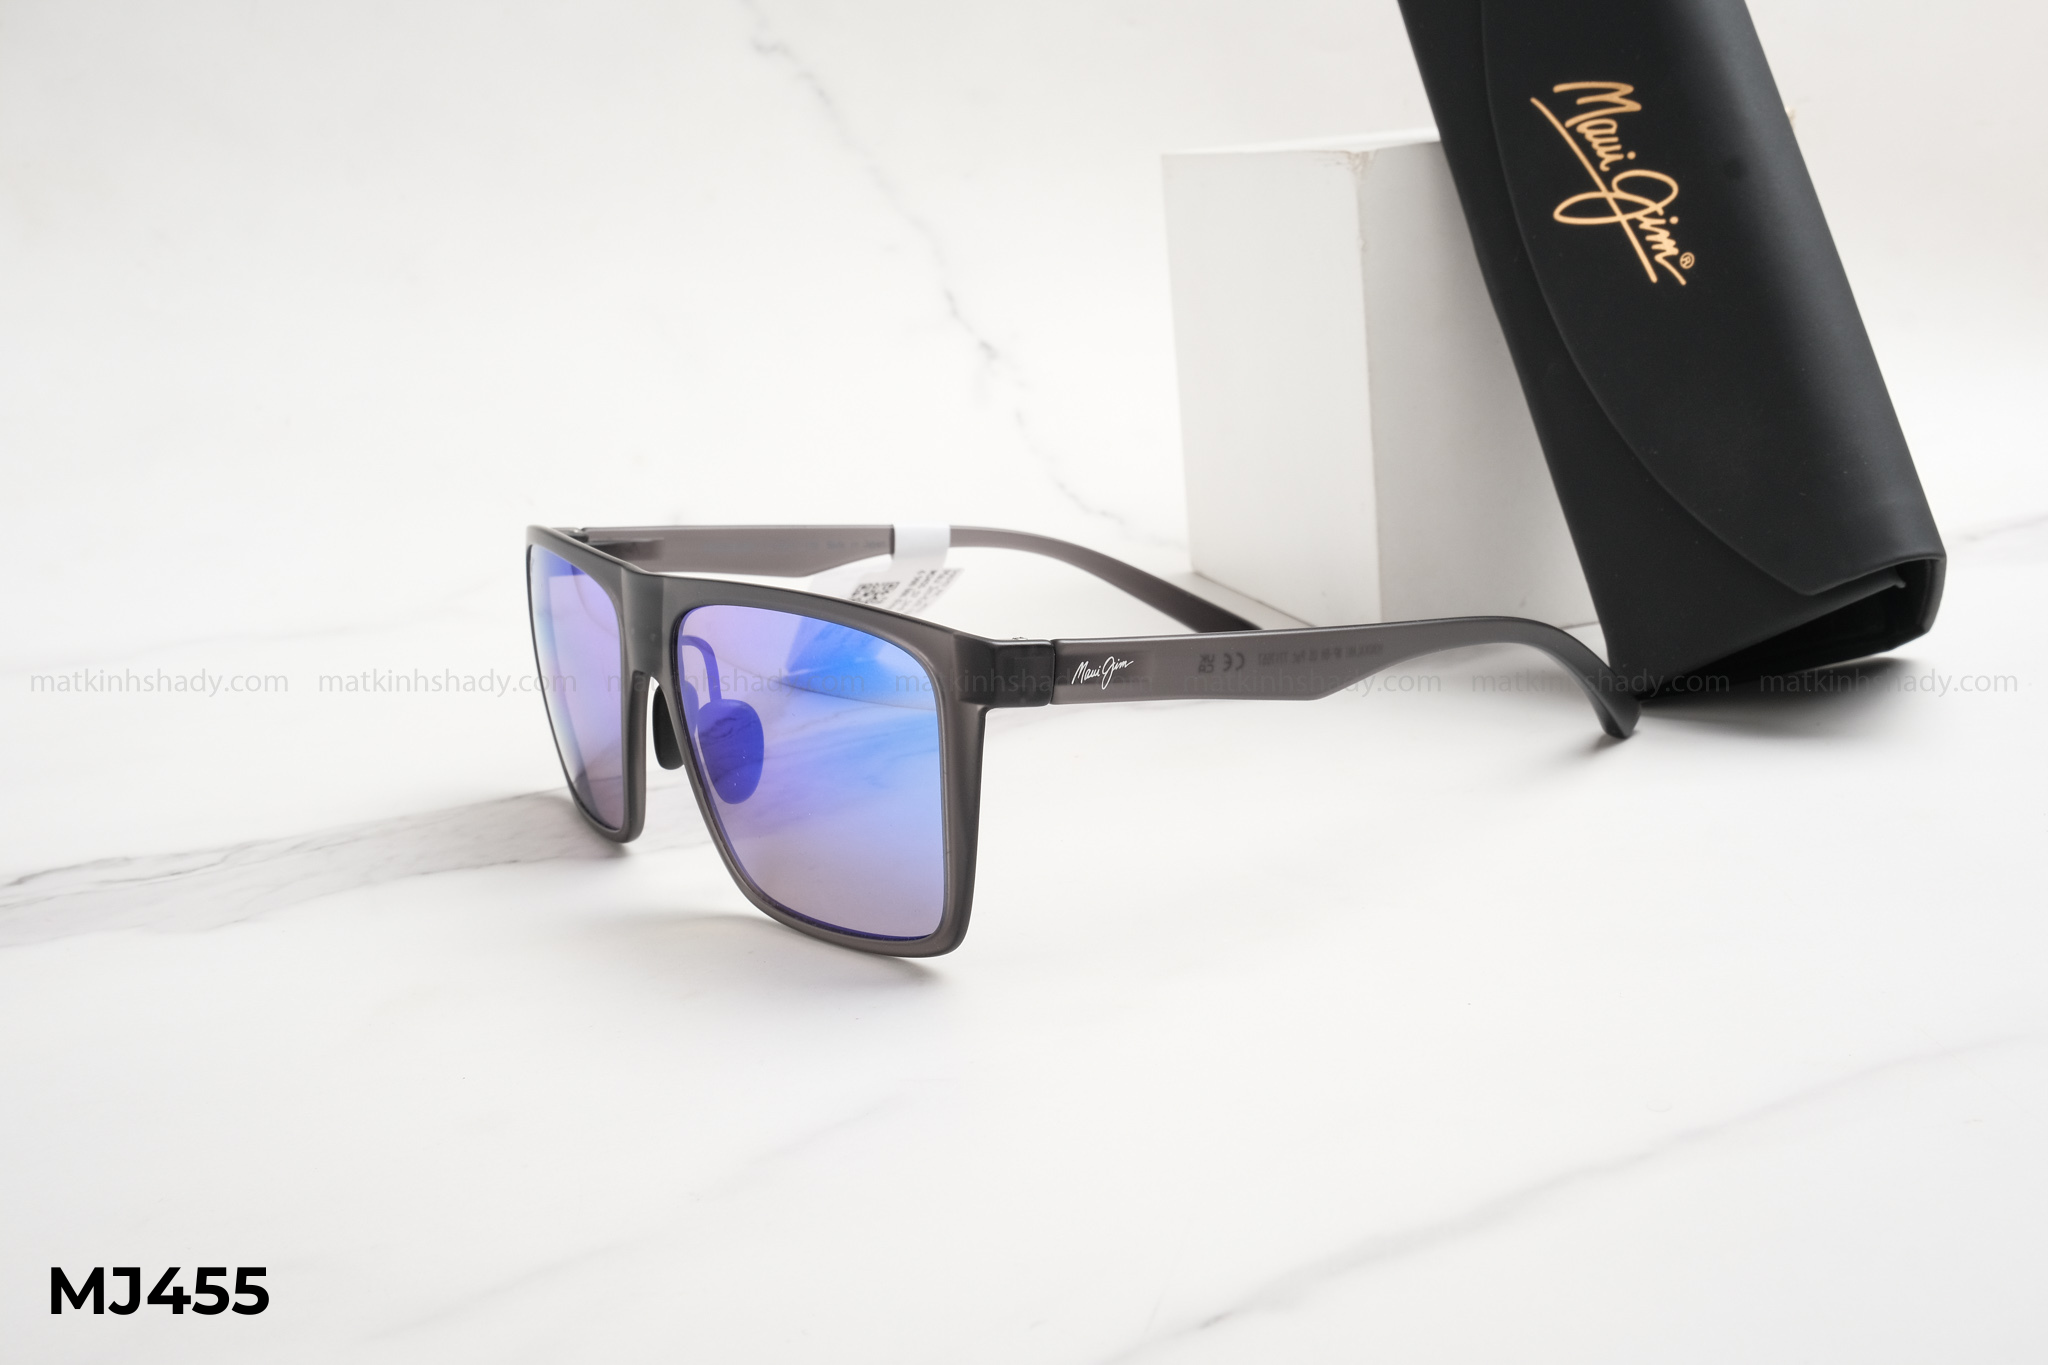  Maui Jim Eyewear - Sunglasses - MJ455 